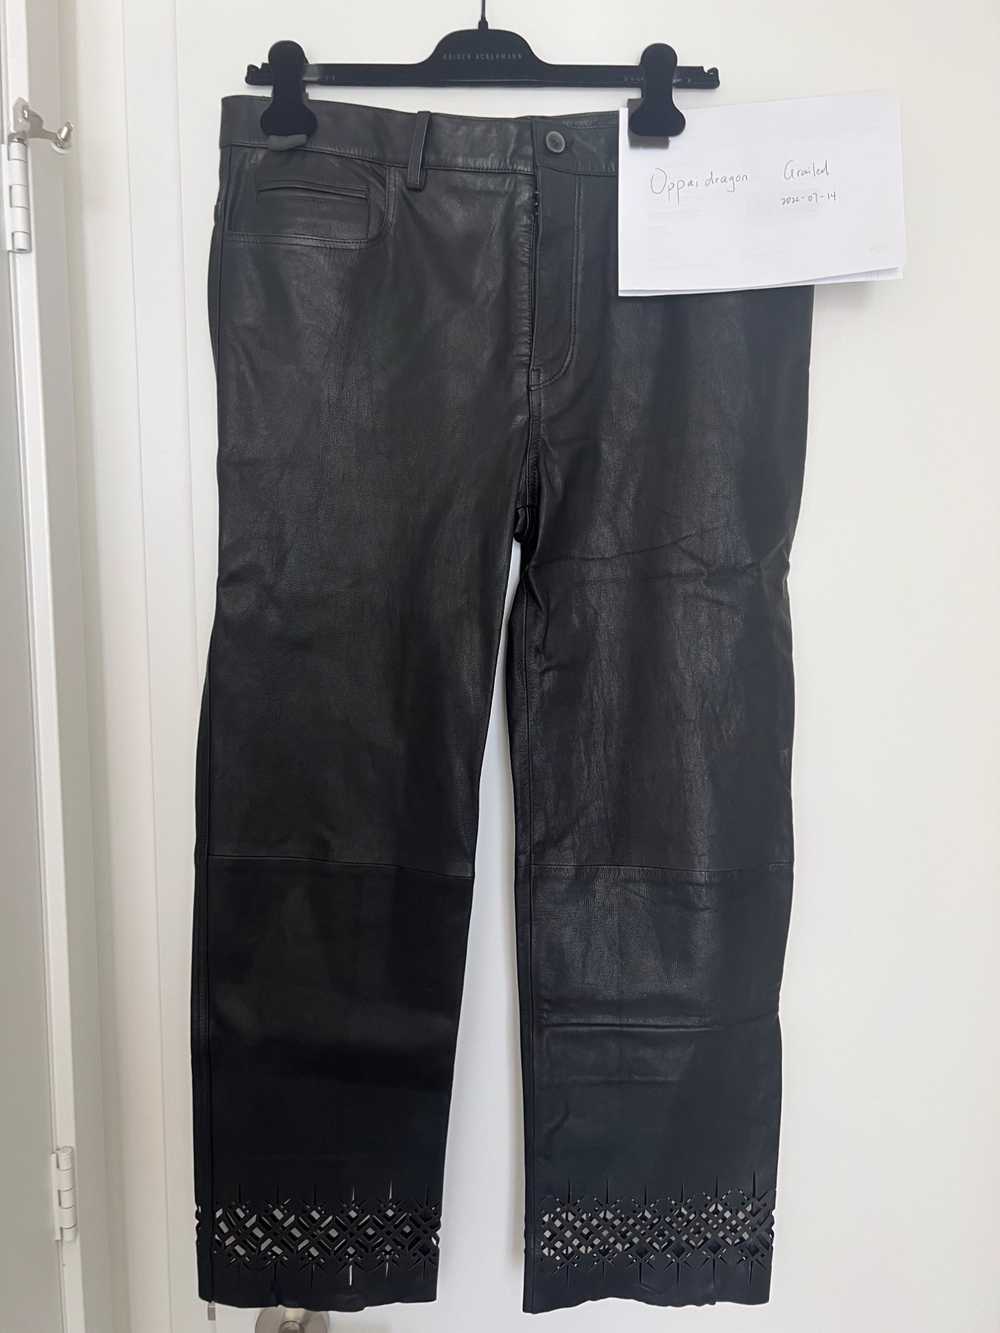 Haider Ackermann SS19 Lasercut Leather Trousers - image 1